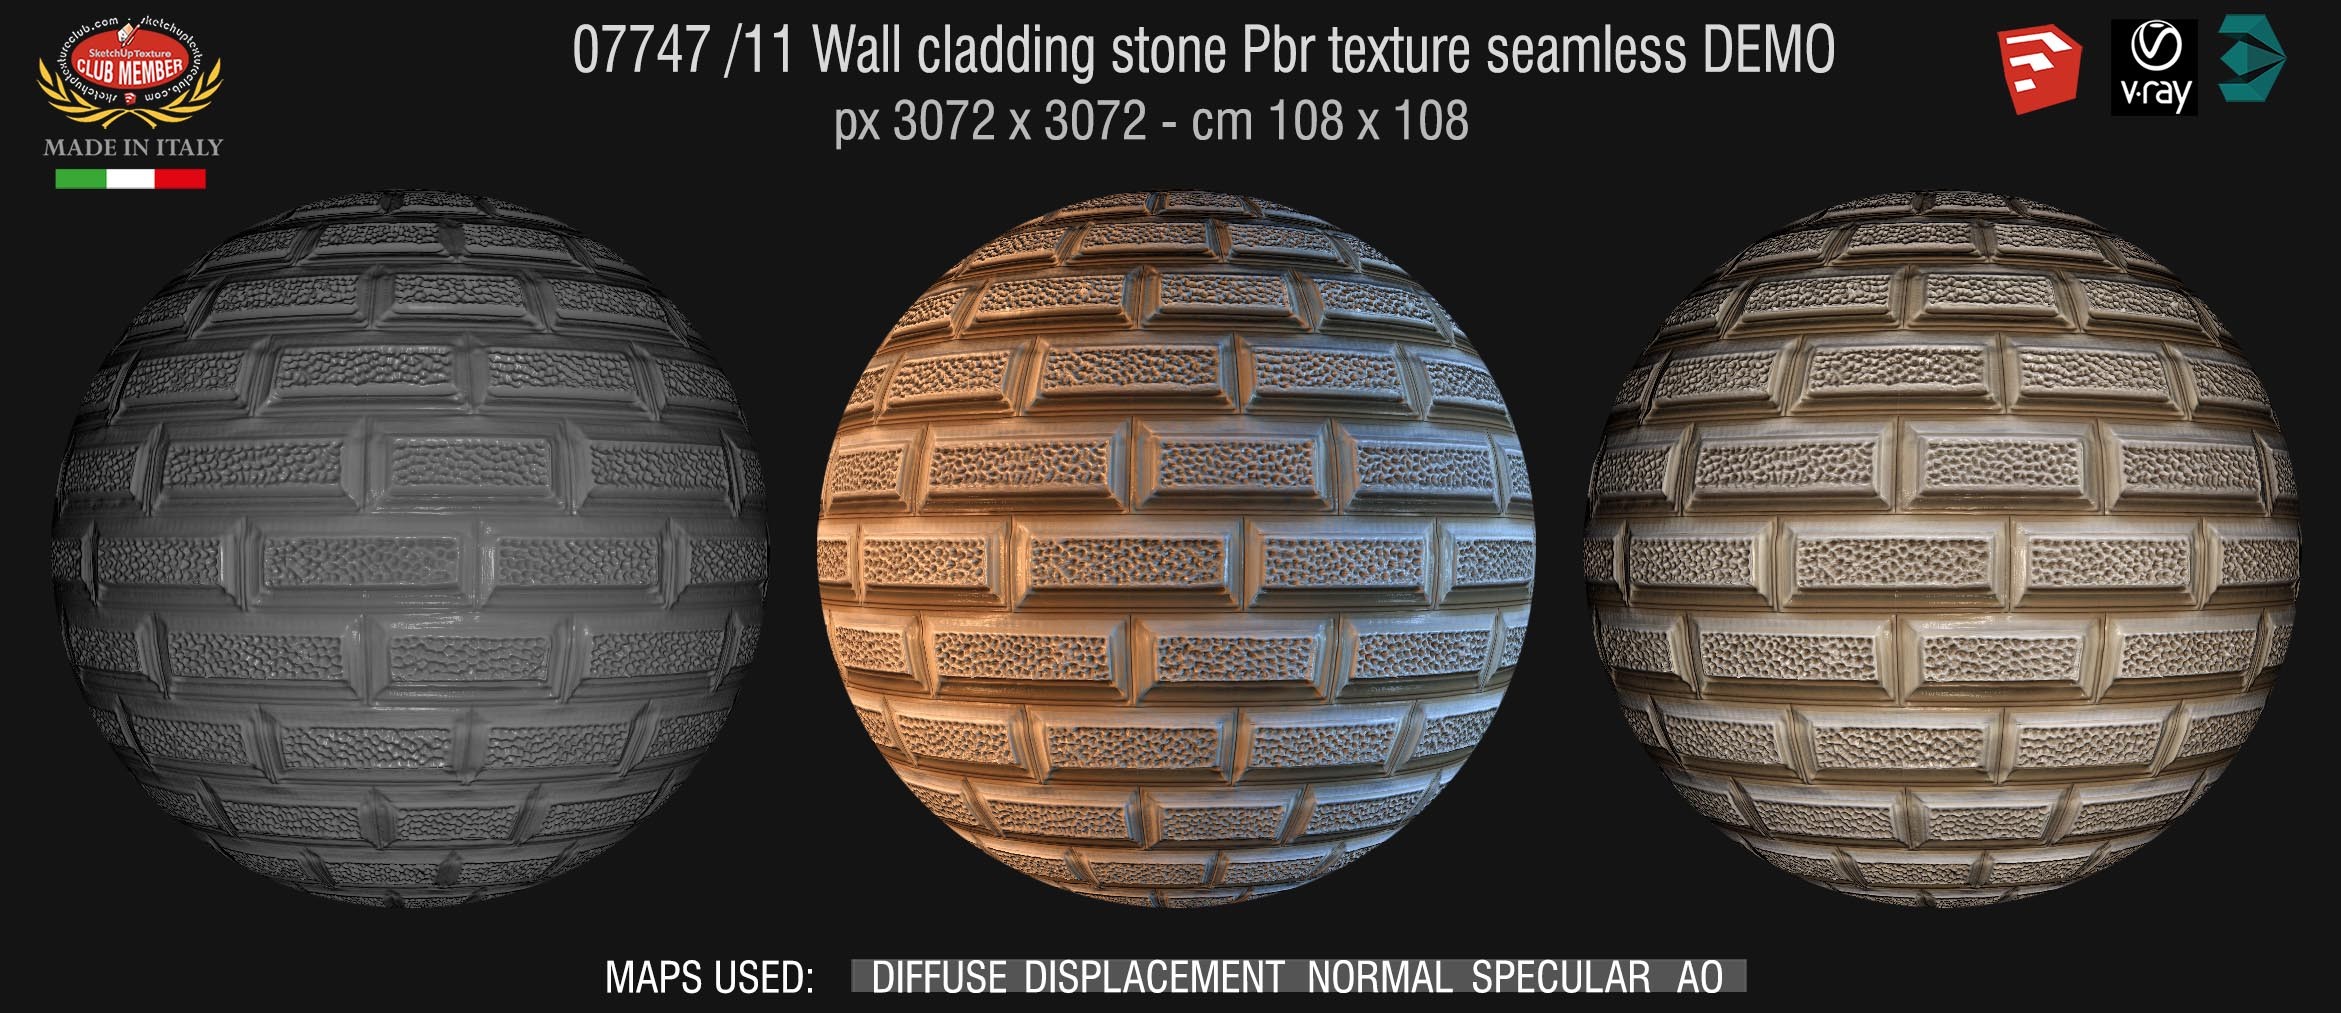 07747/11 Wall cladding stone pbr texture seamless demo